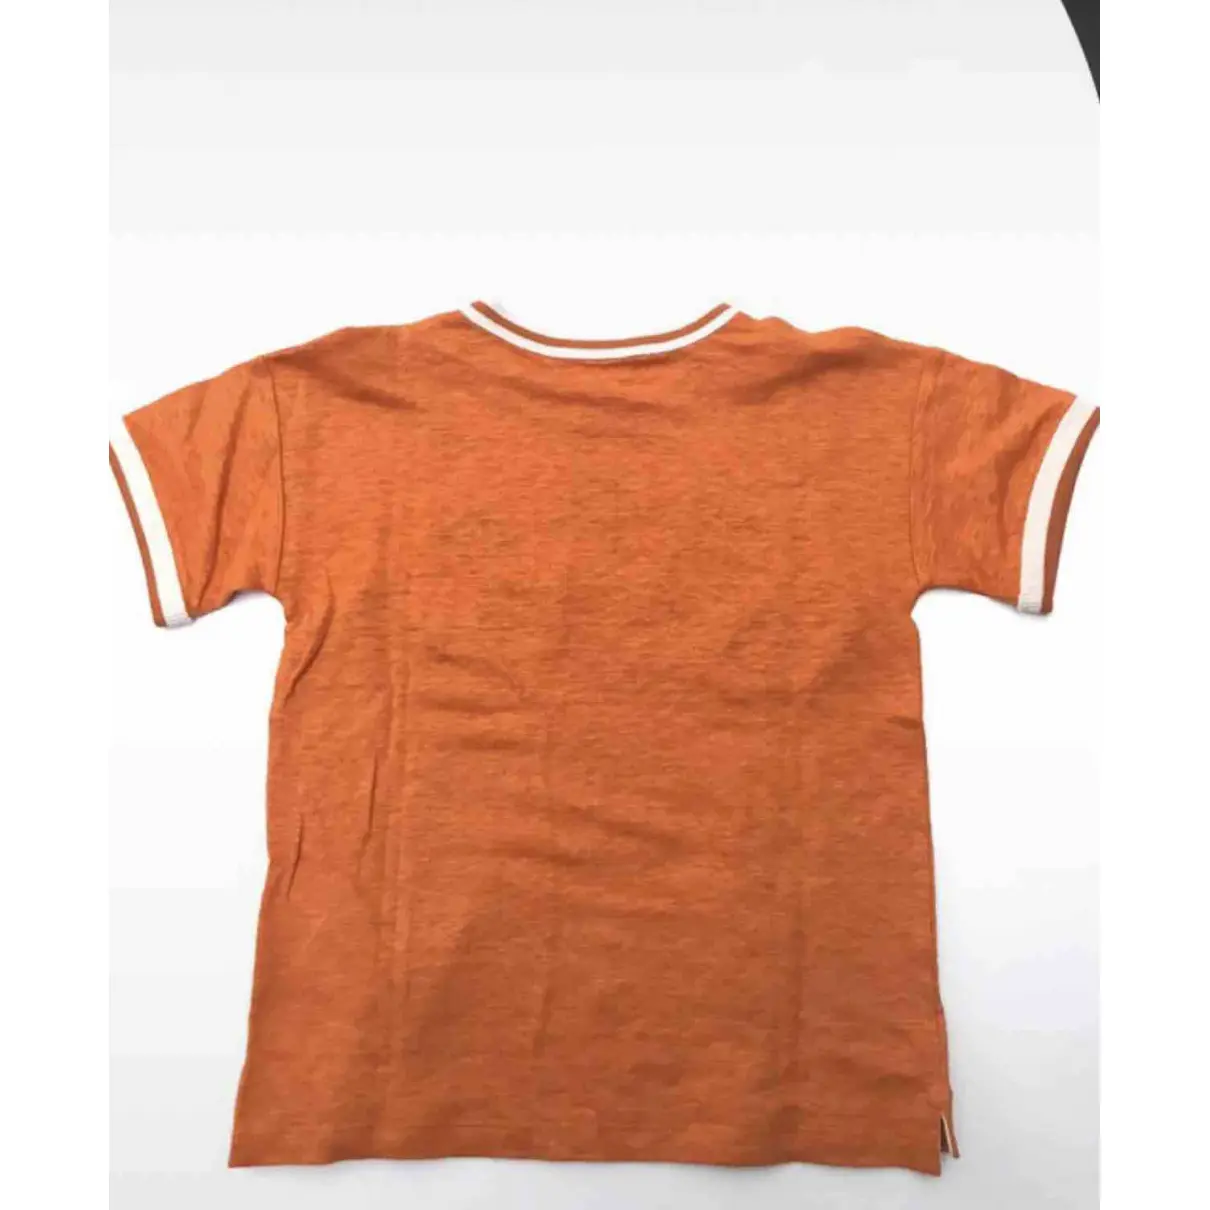 Buy Gucci Orange Cotton Top online